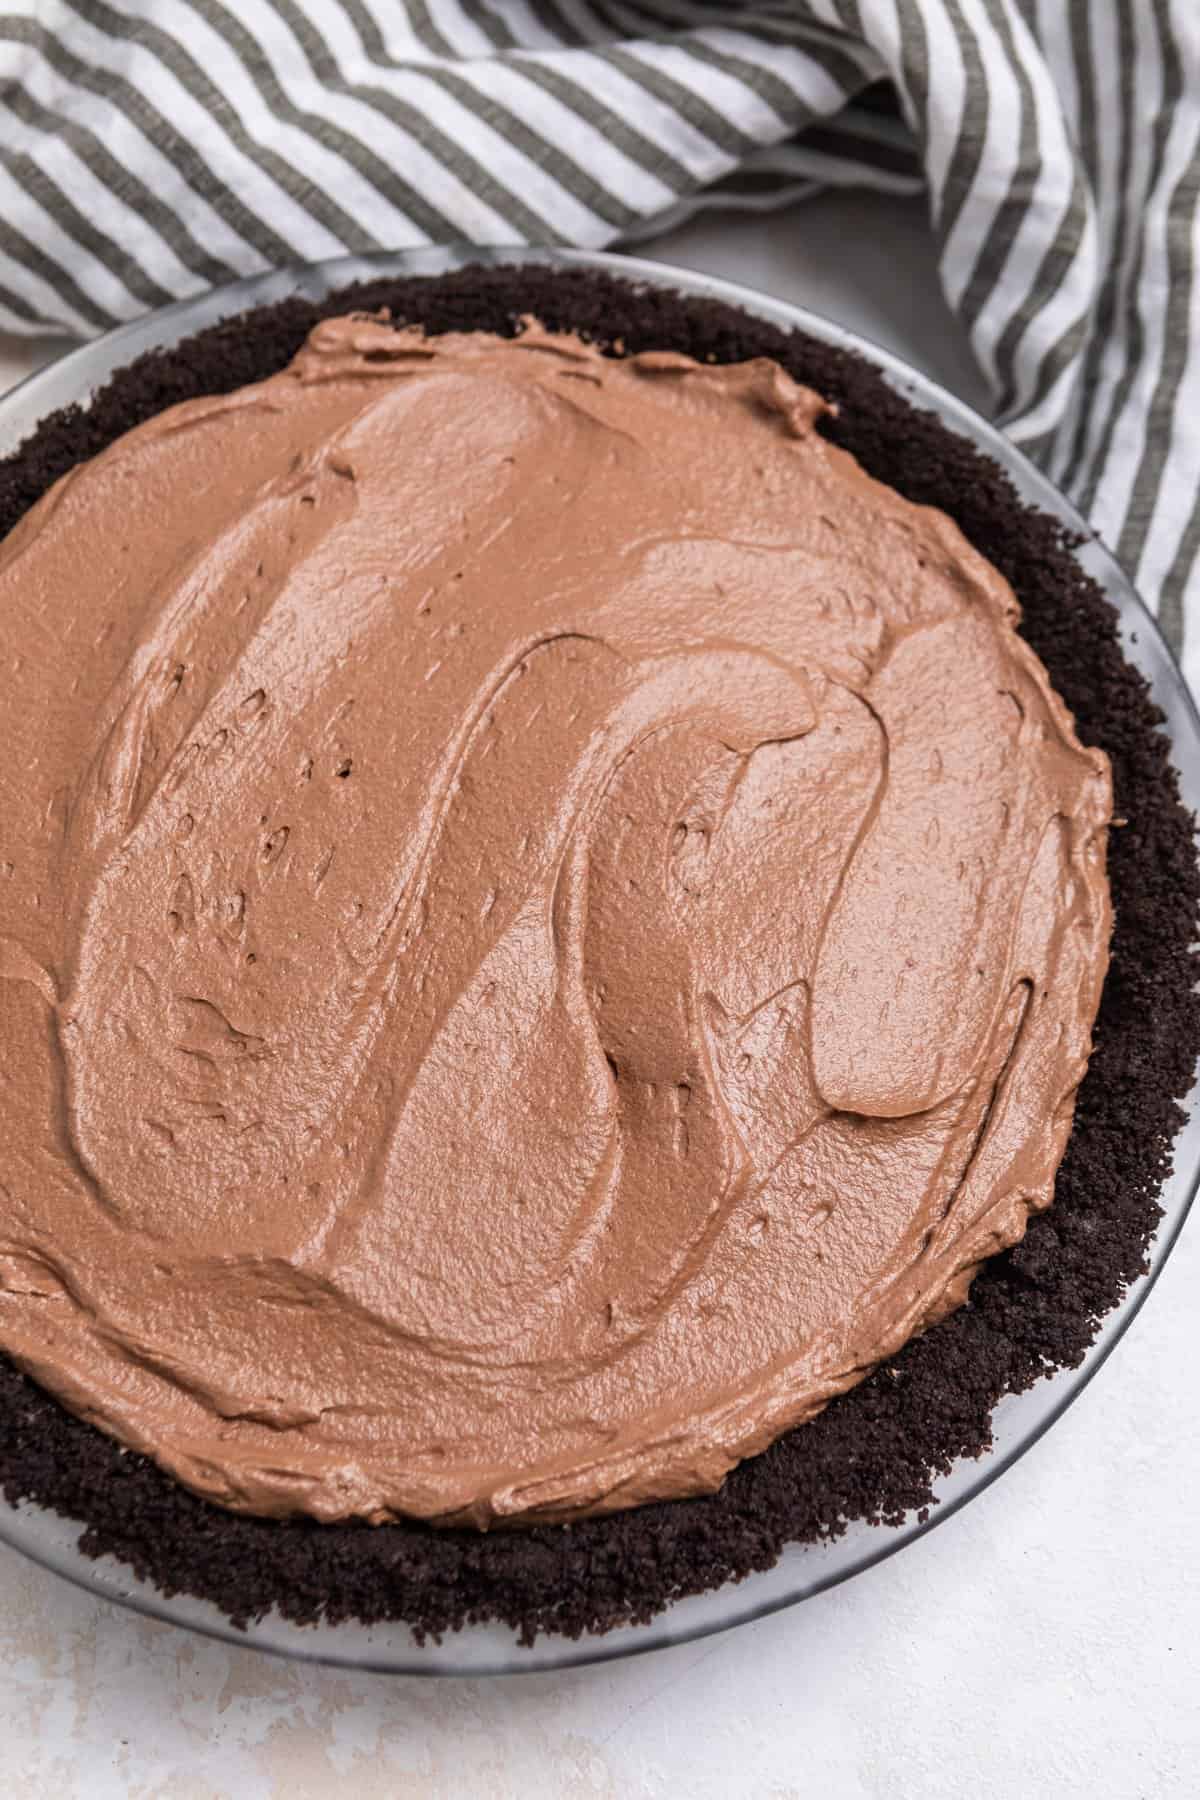 No Bake chocolate pie filling spread into pie pan with Oreo crust.